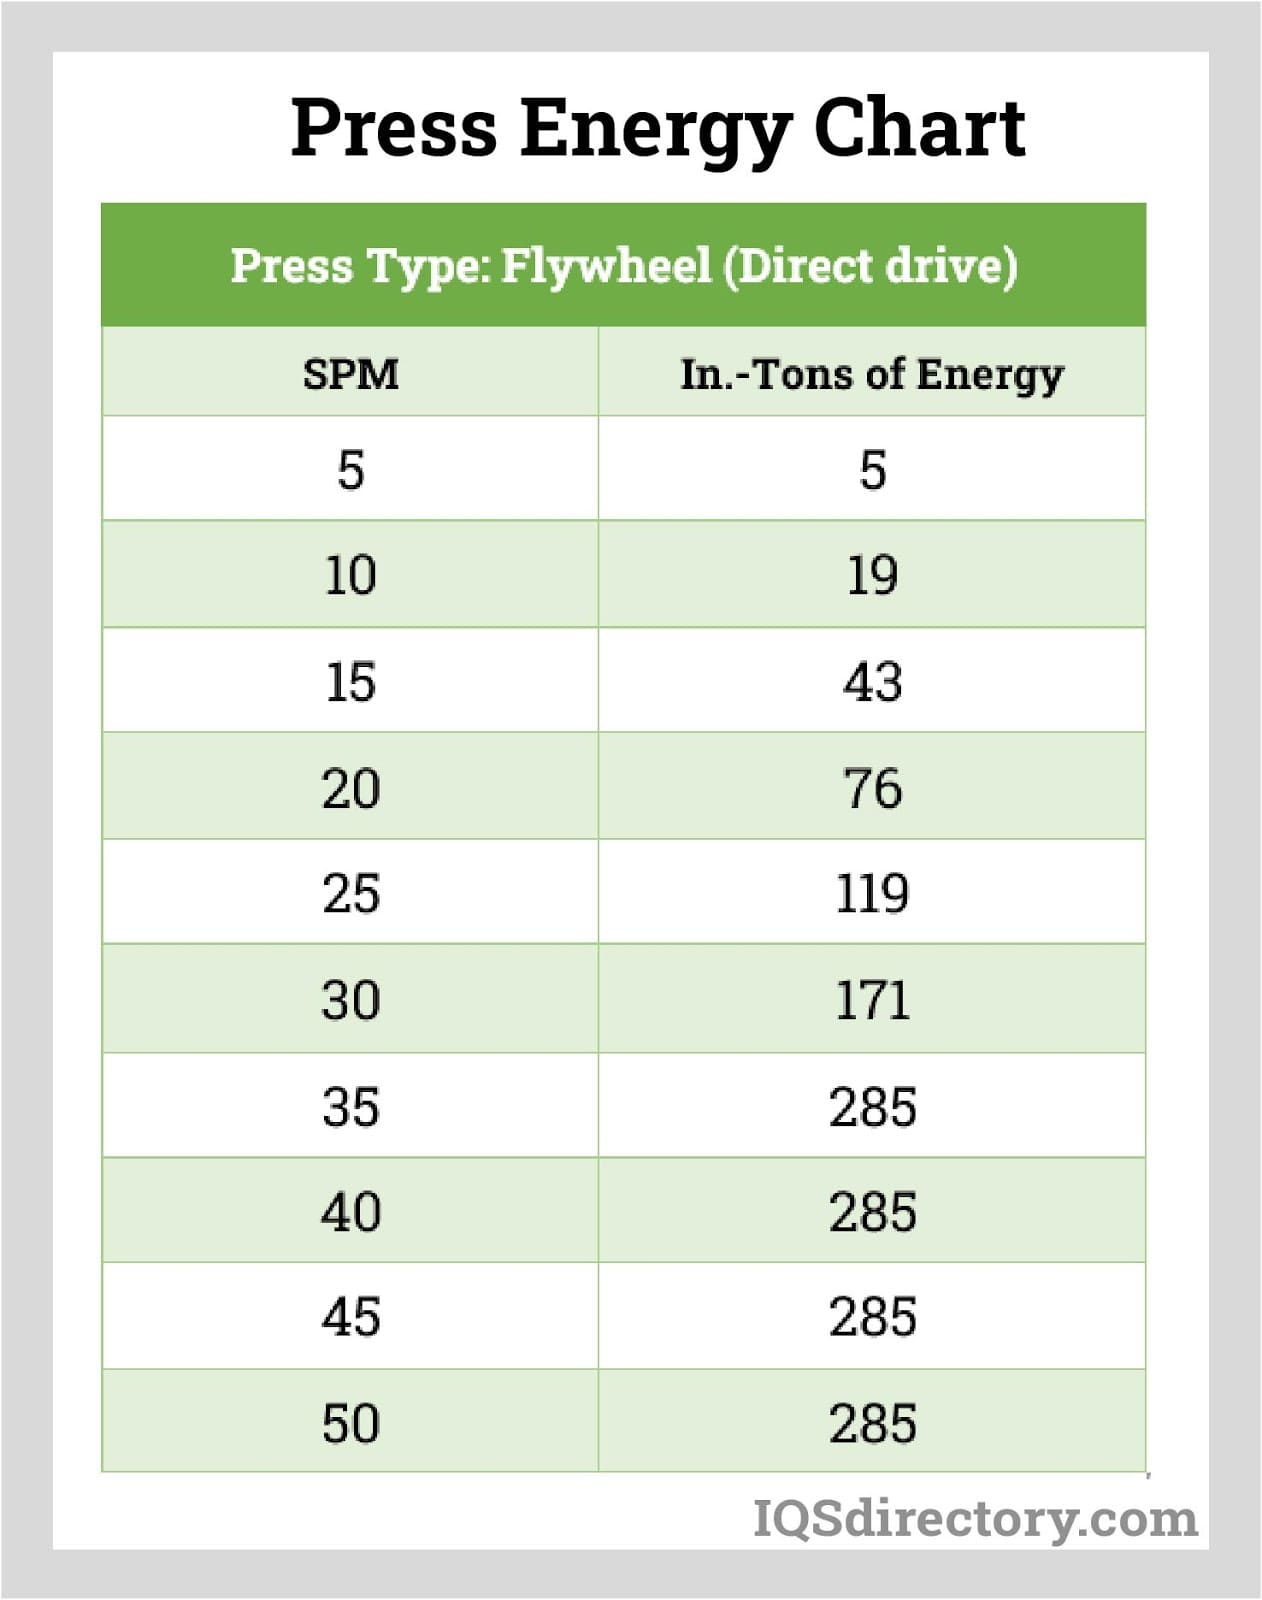 Press Energy Chart